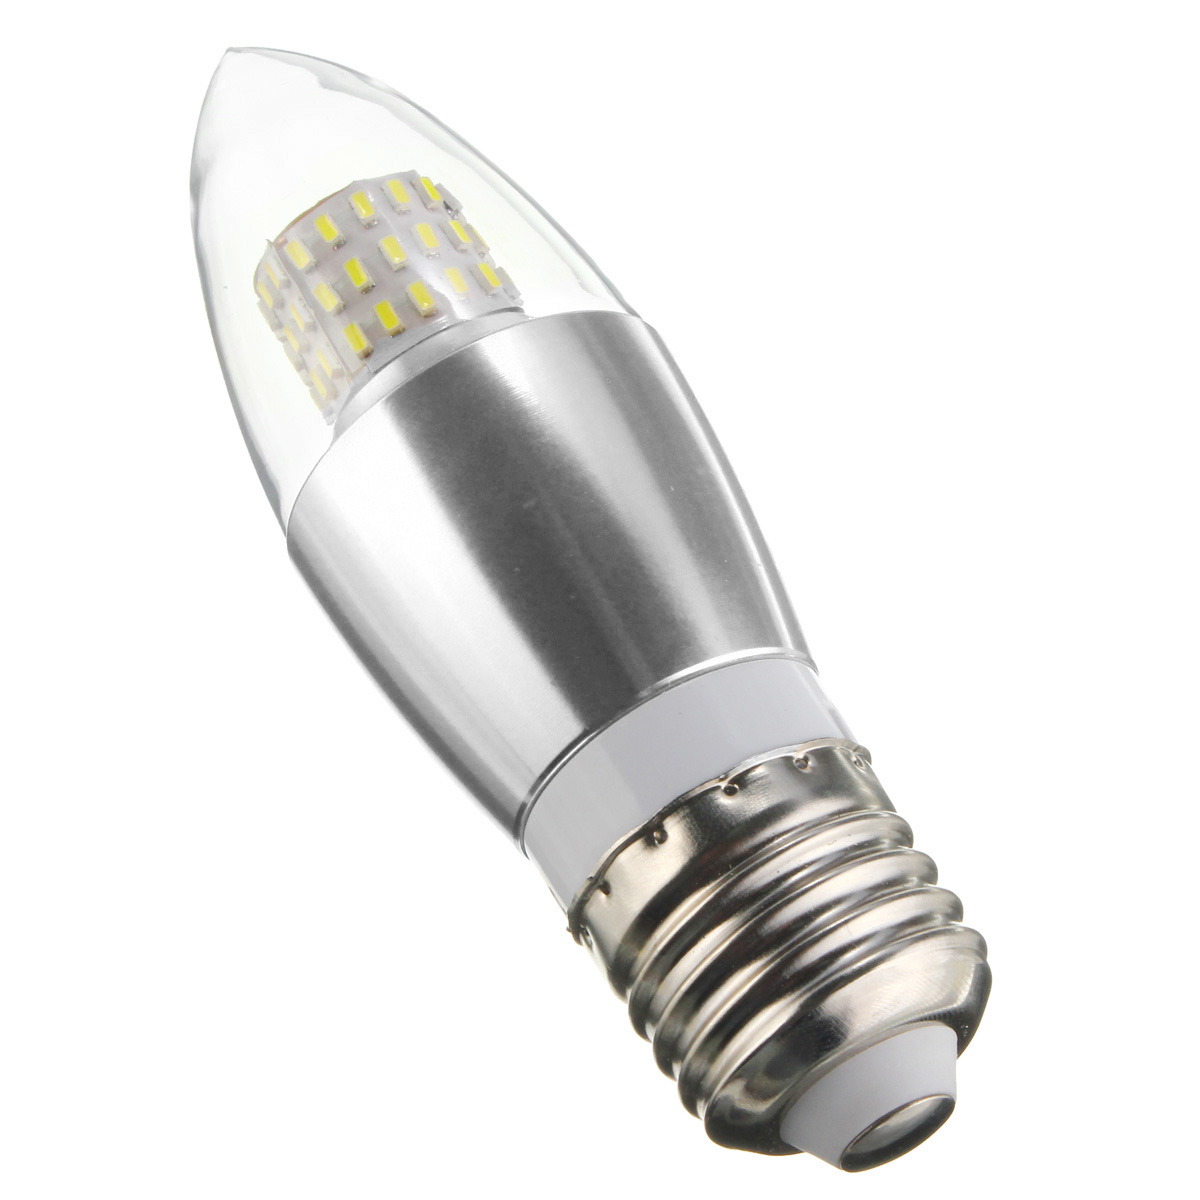 Dimmable-E27-E12-E14-7W--60-SMD-3014-LED-Warm-White-White-Sliver-Candle-Lamp-Bulb-AC-220V-1039637